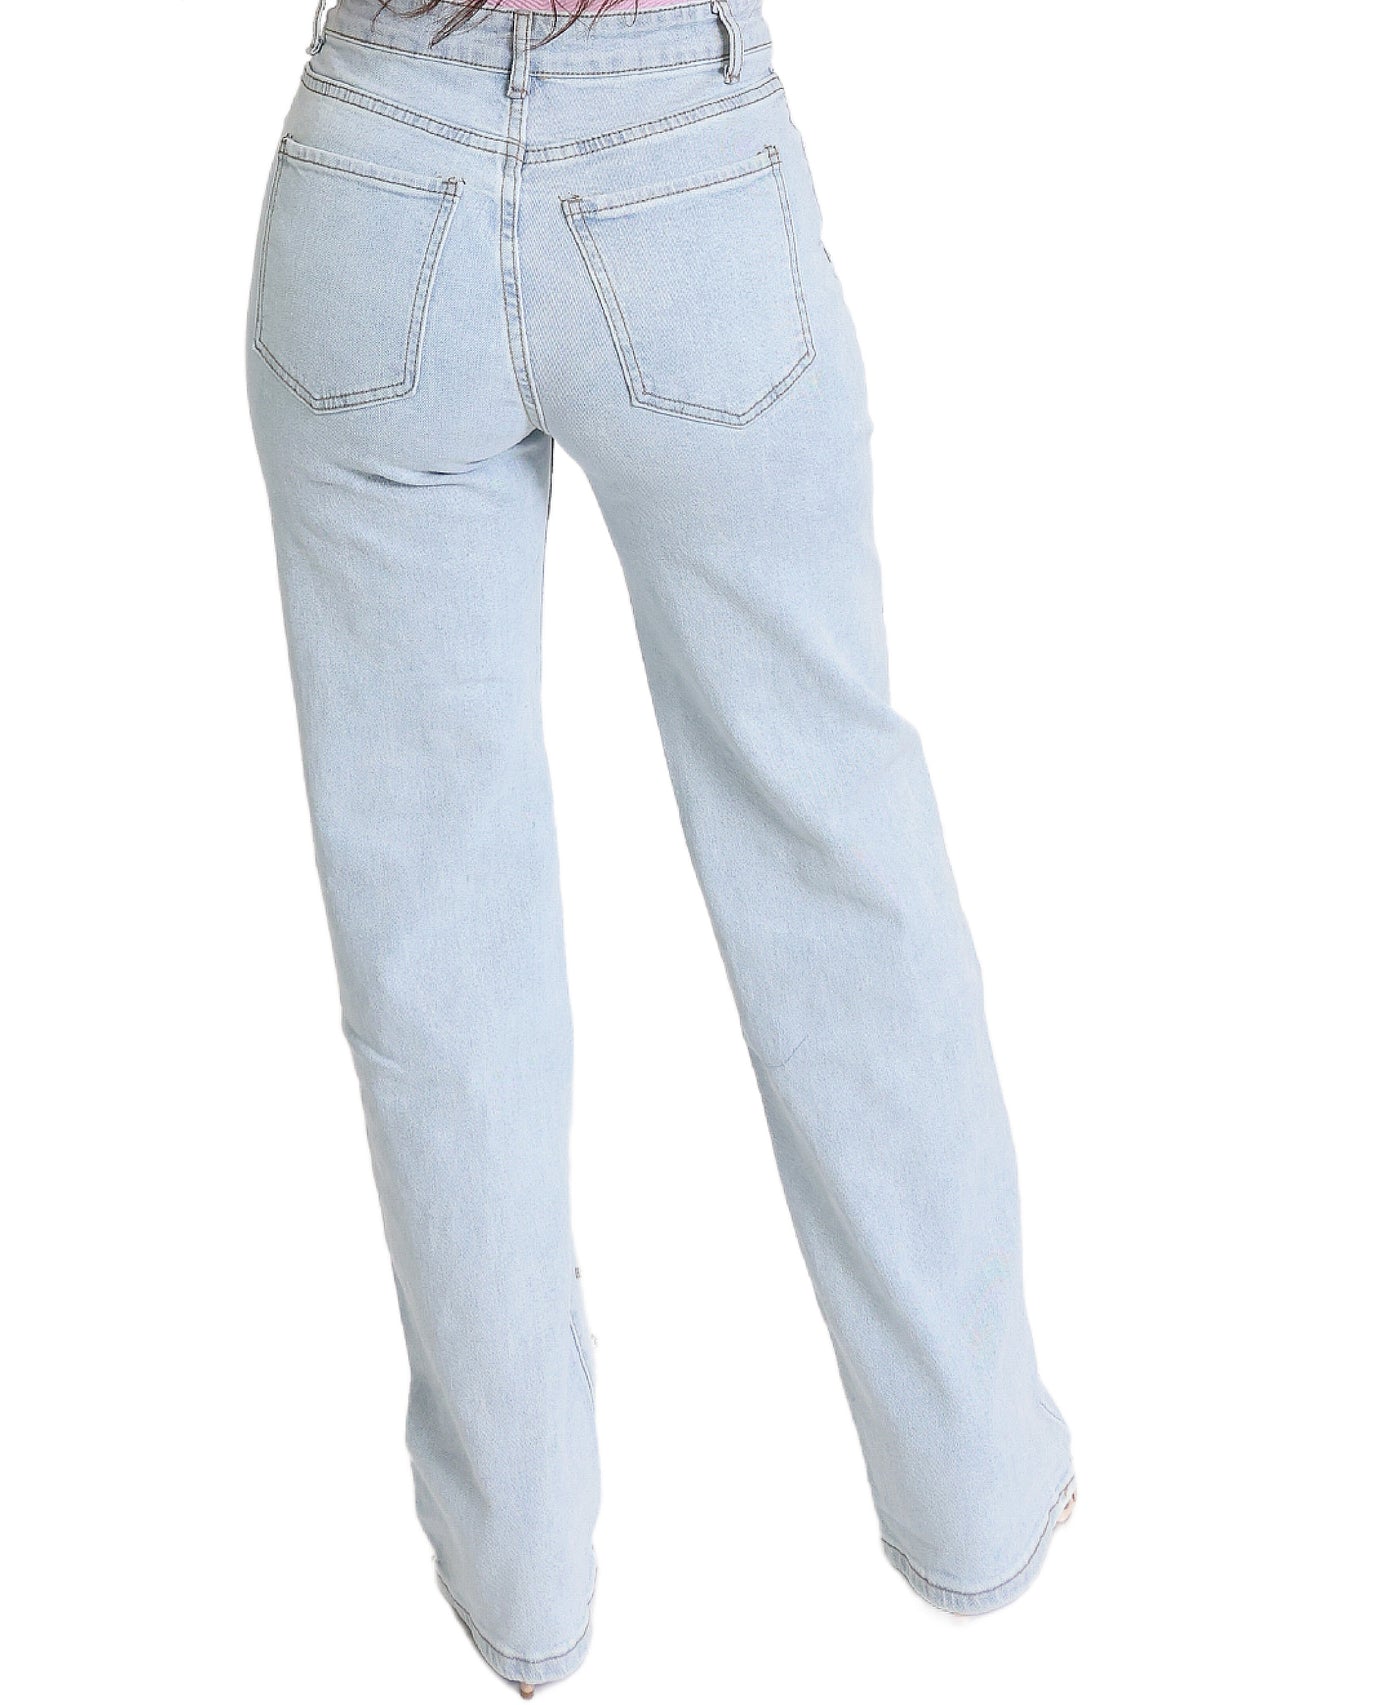 Jeans w/ Rhinestones image 2